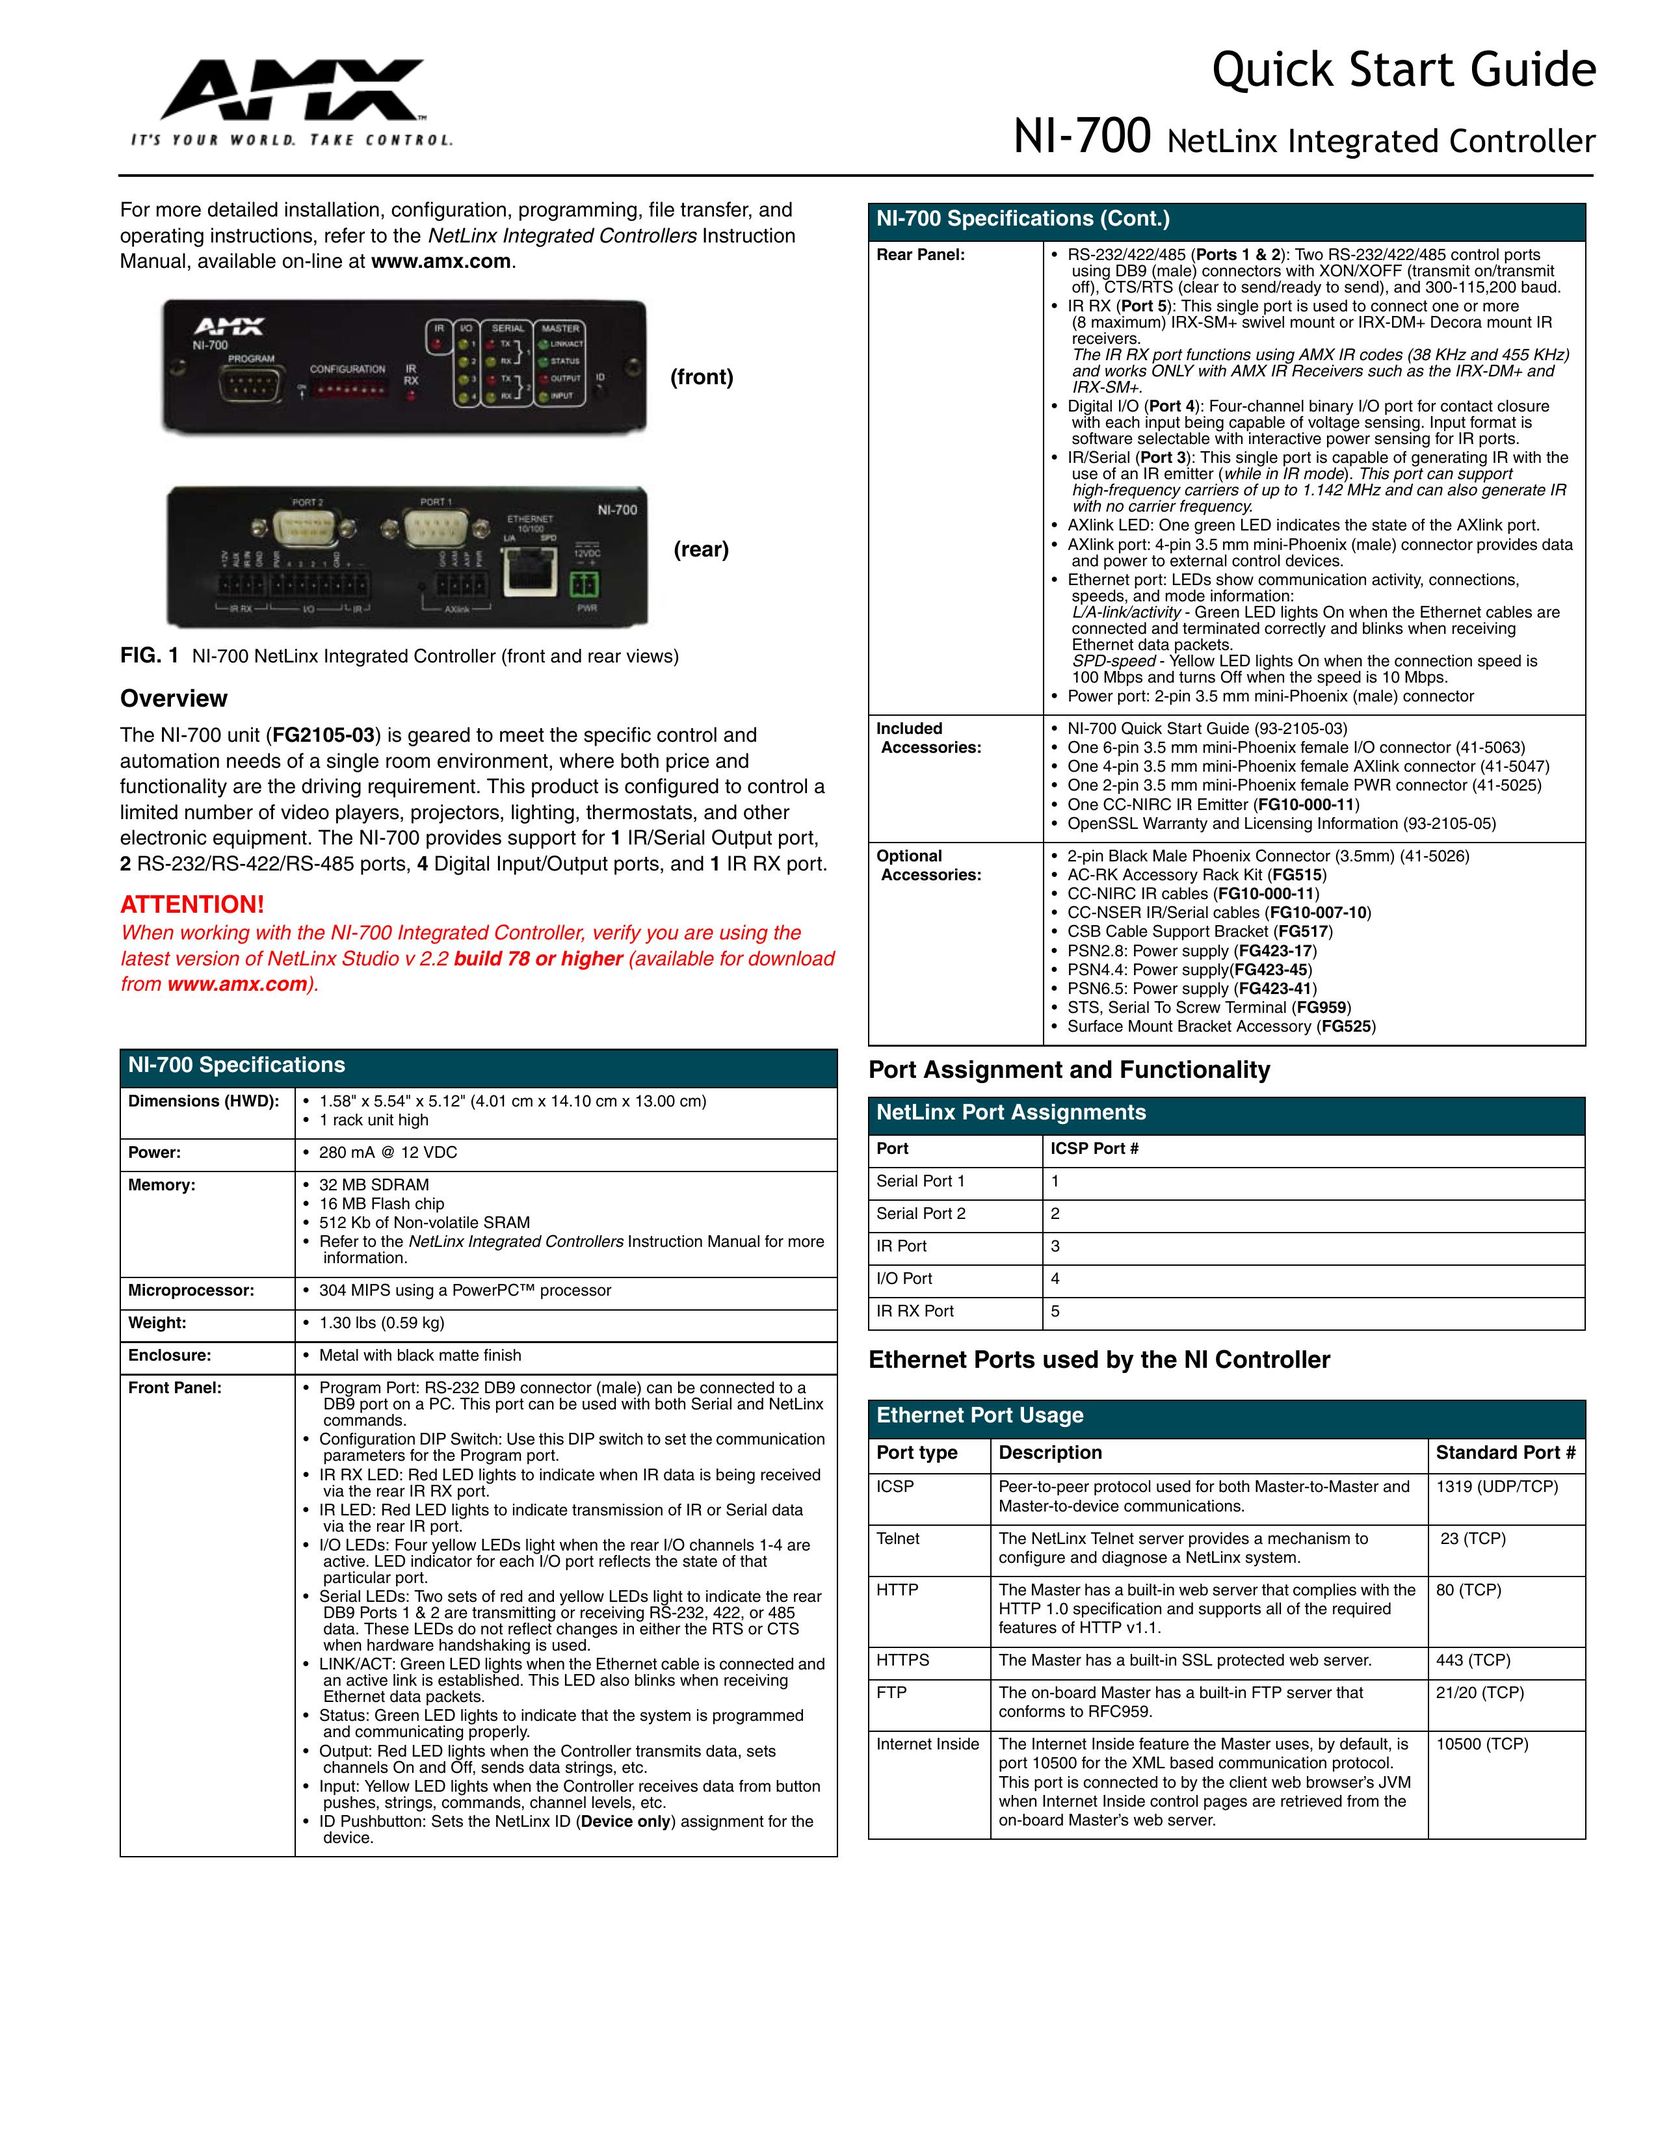 AMX NI-700 Video Game Controller User Manual